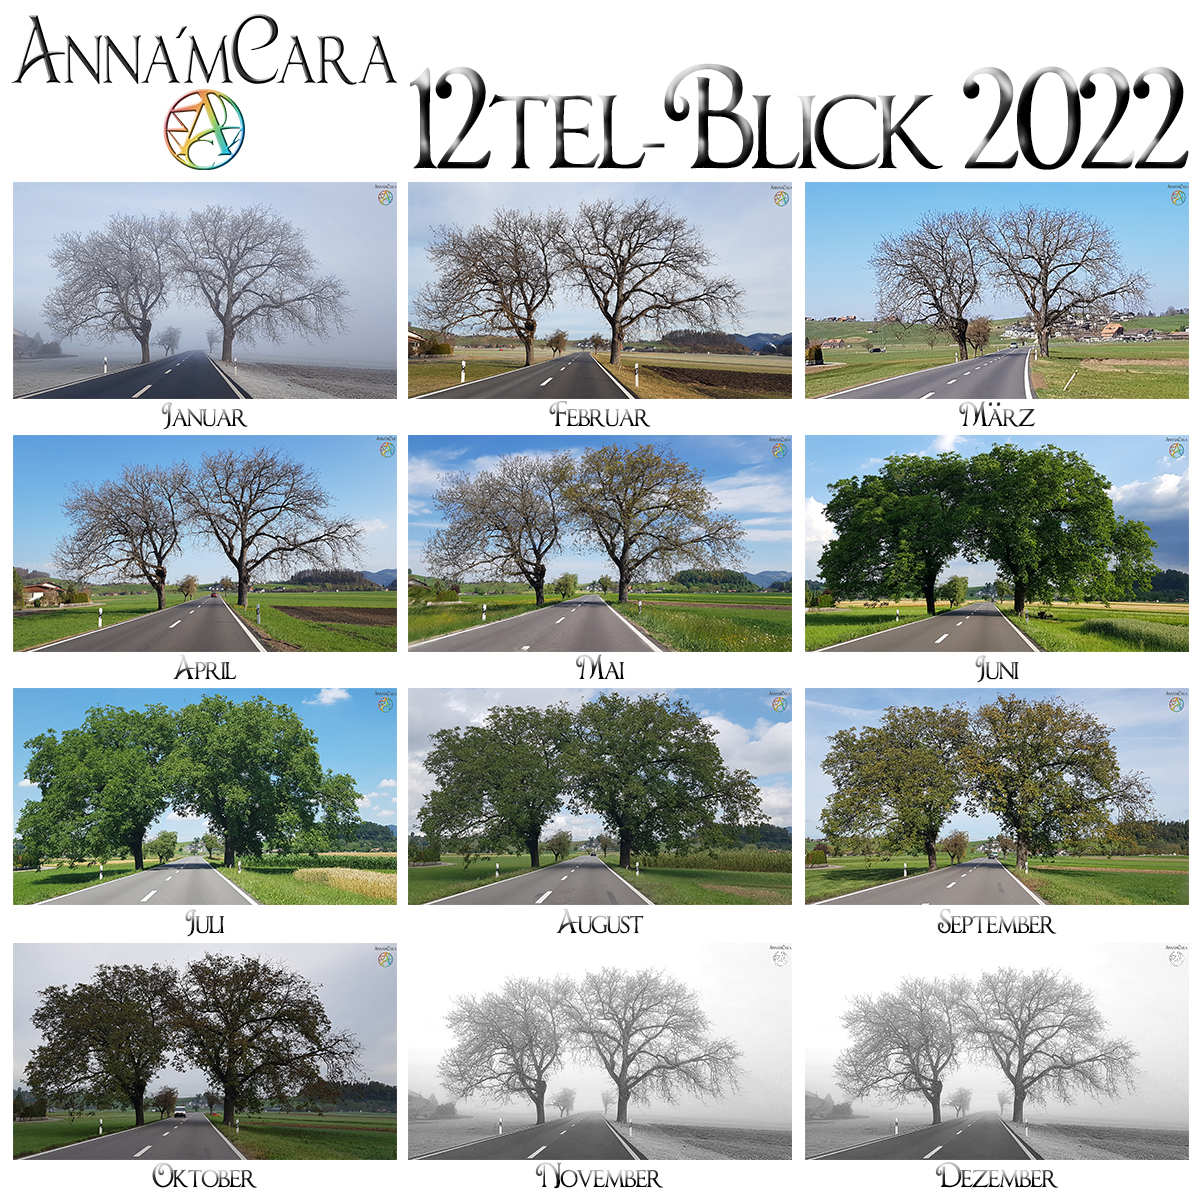 Anna'mCara-Blog - 12tel-Blick - Jahresblick Baumfreunde - Oktober 2022